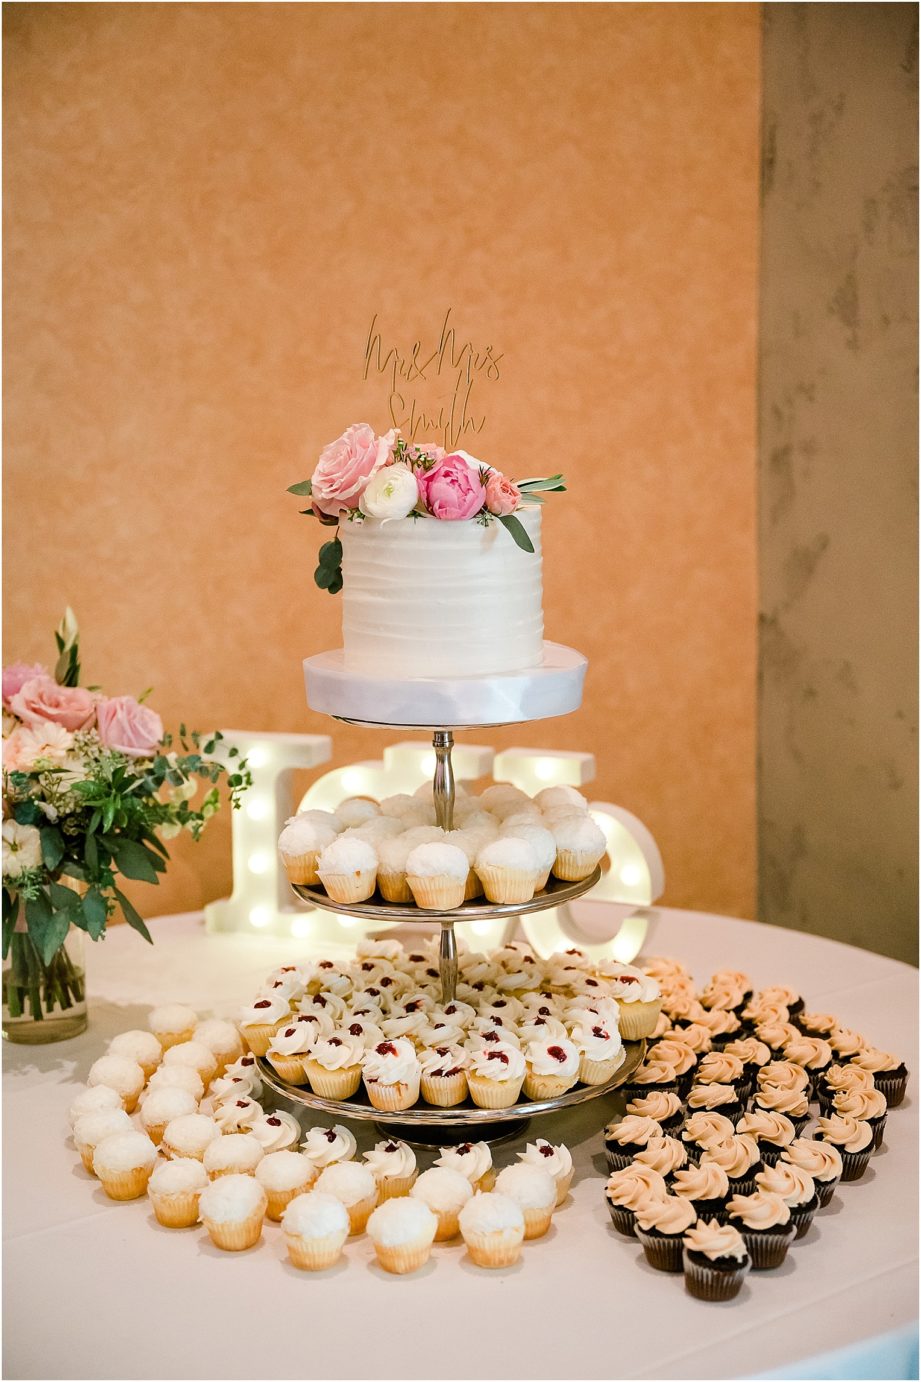 Cake setup for wedding at Terra Blanca Winery